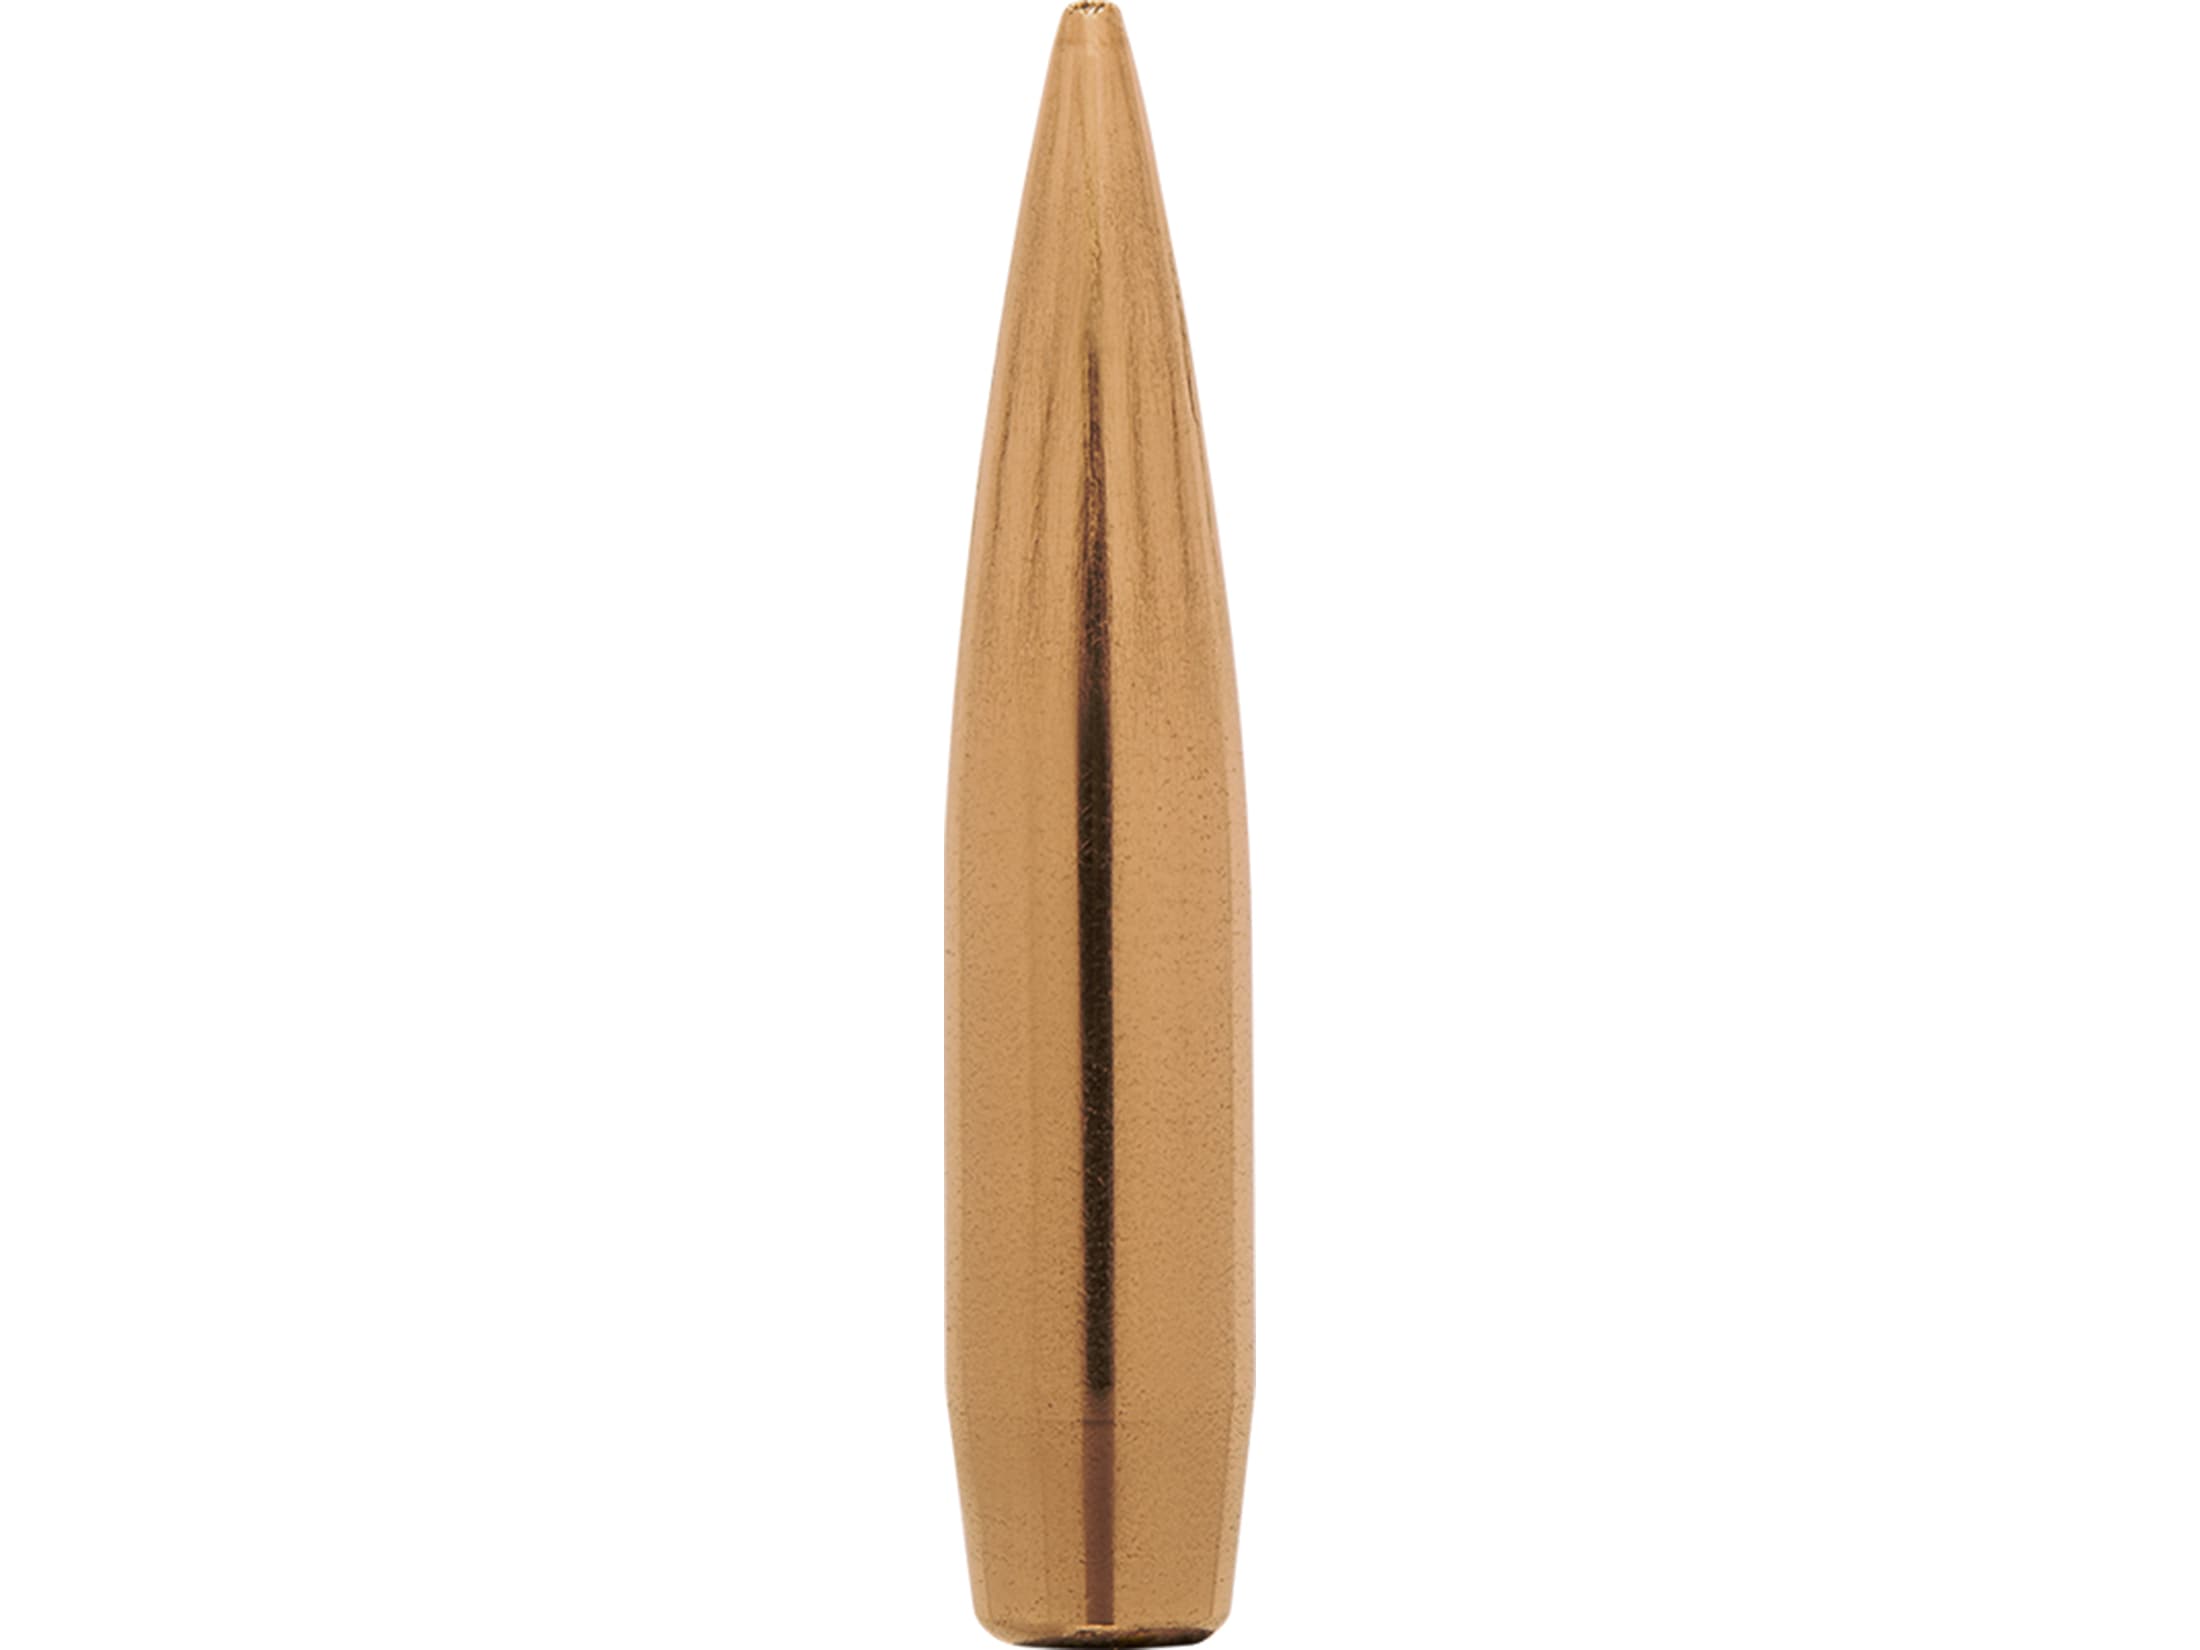 Berger Long Range Hybrid Target Bullets 243 Caliber, 6mm (243 Diameter) 109 Grain Hollow Point Boat Tail